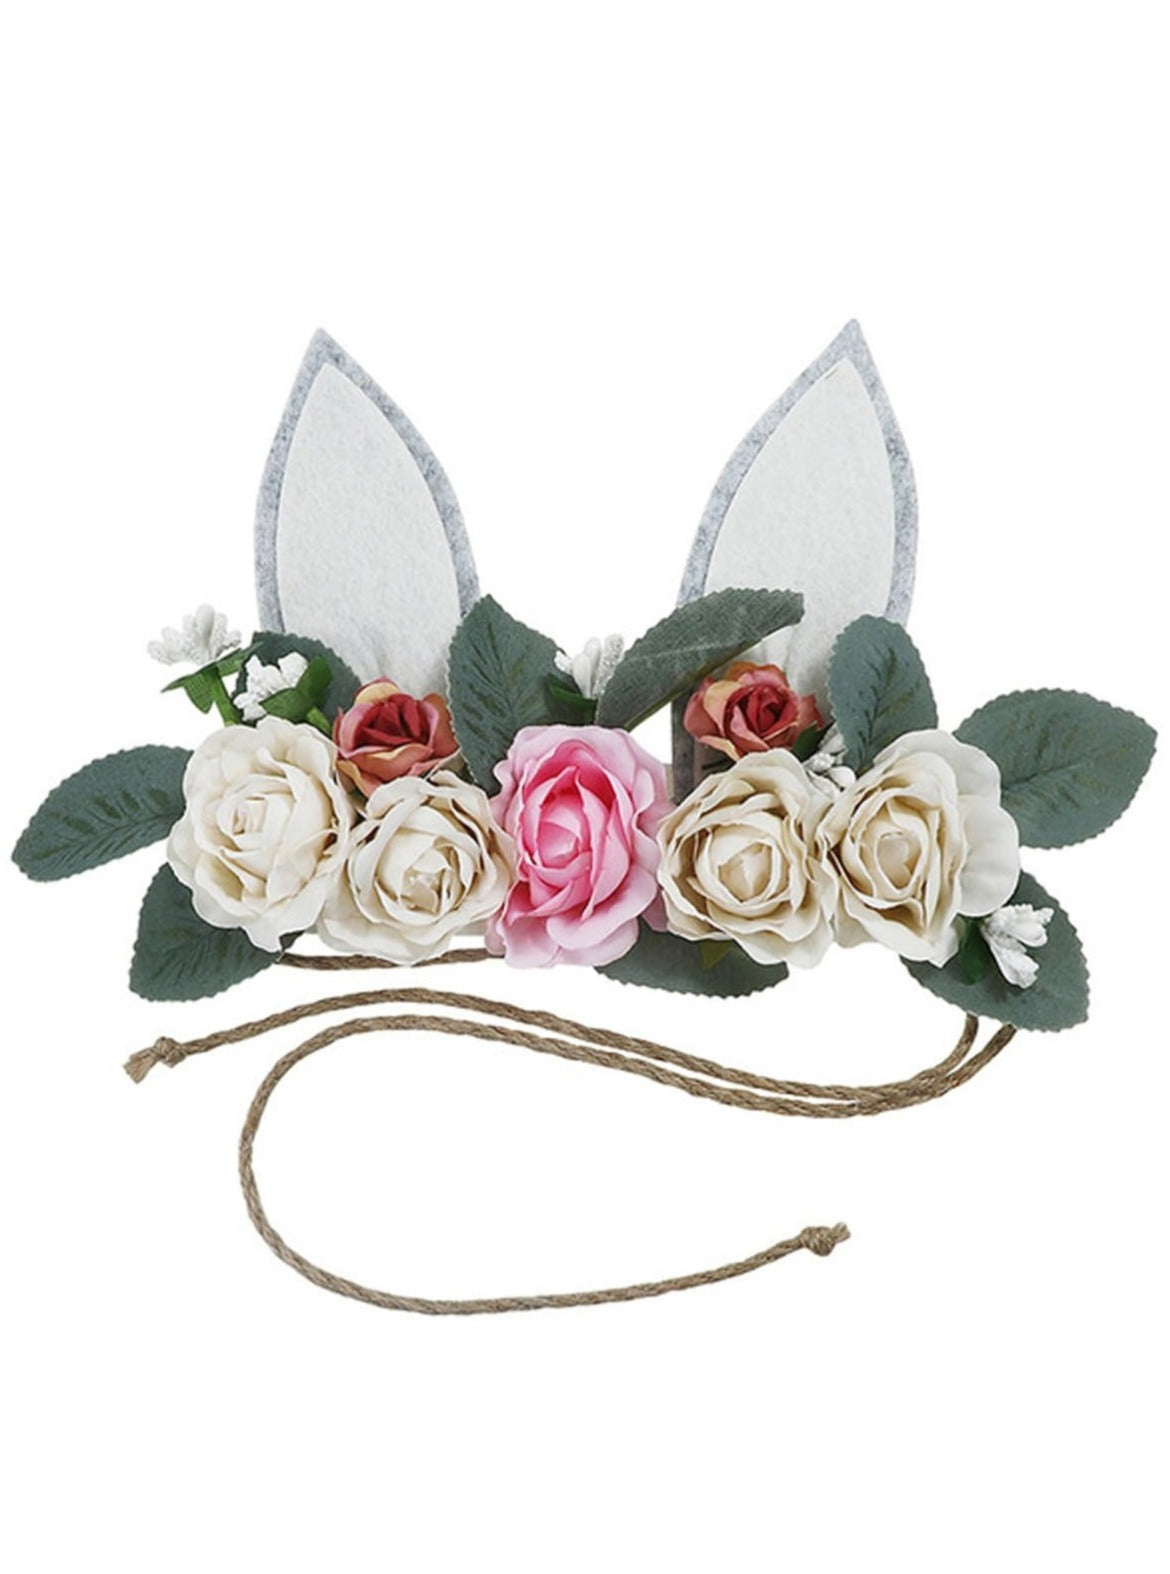 Girls Flower Bunny Ears Headband - Grey & White / Rose - Girls Accessories